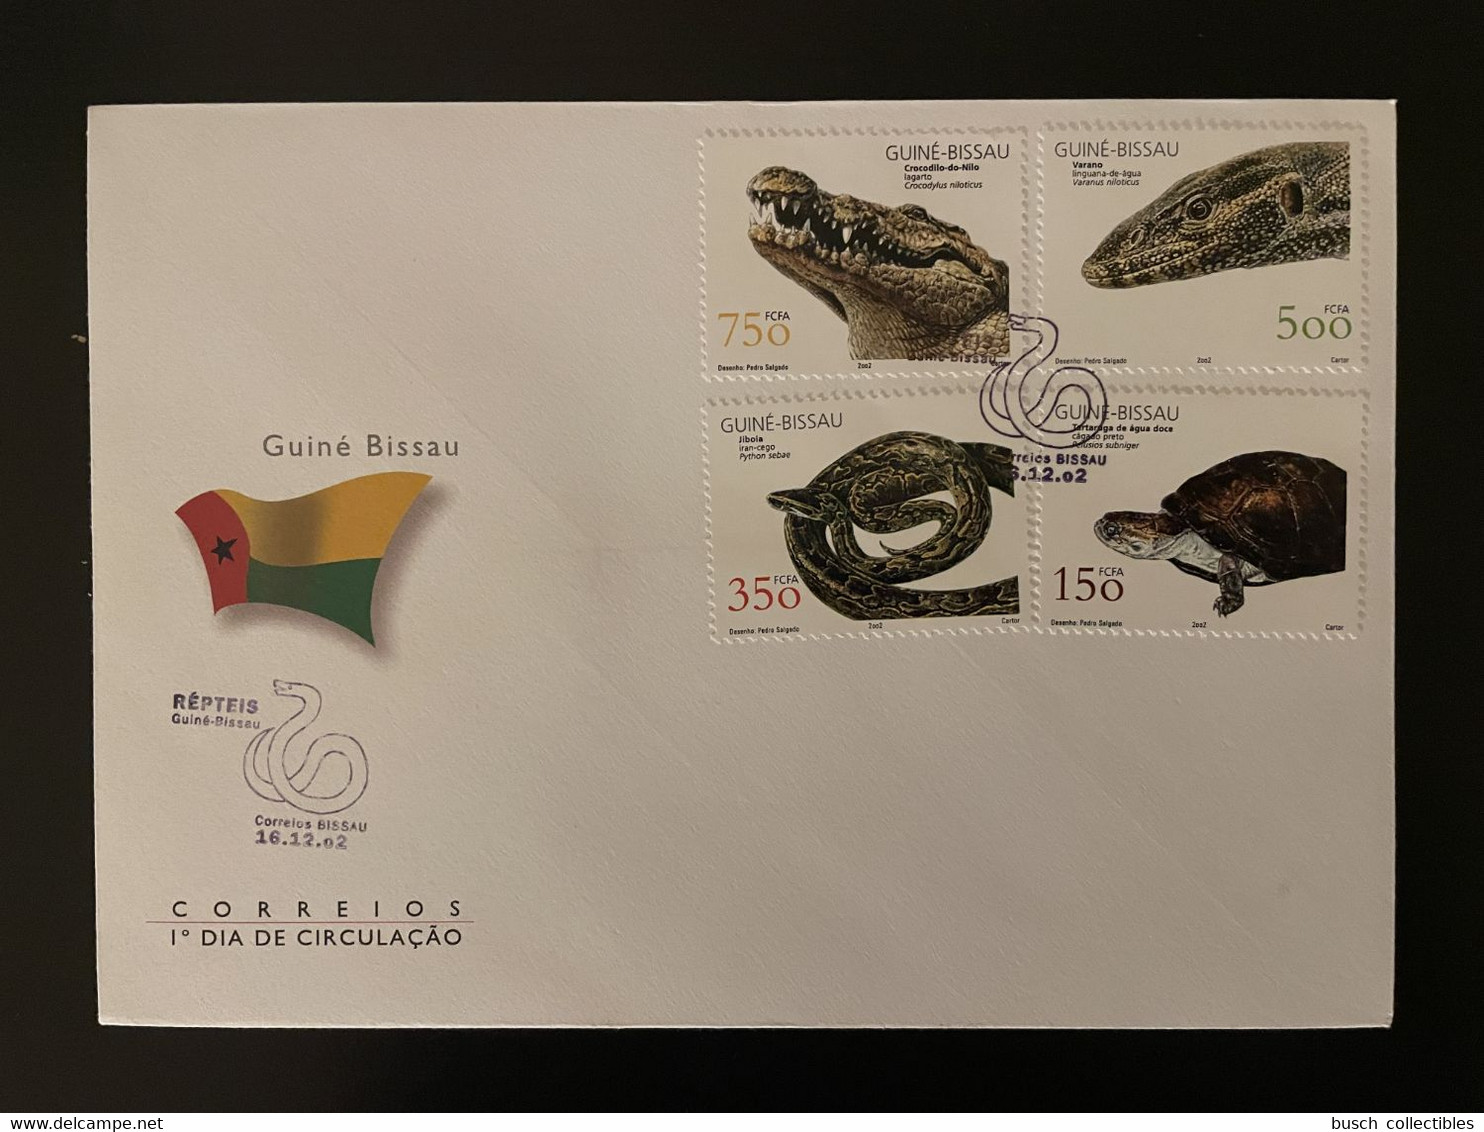 Guiné-Bissau Guinea Guinée Bissau 2002 Mi. 2029 - 2032 FDC Reptiles Reptilien Schildkröte Schlange Snake Serpent Tortue - Snakes